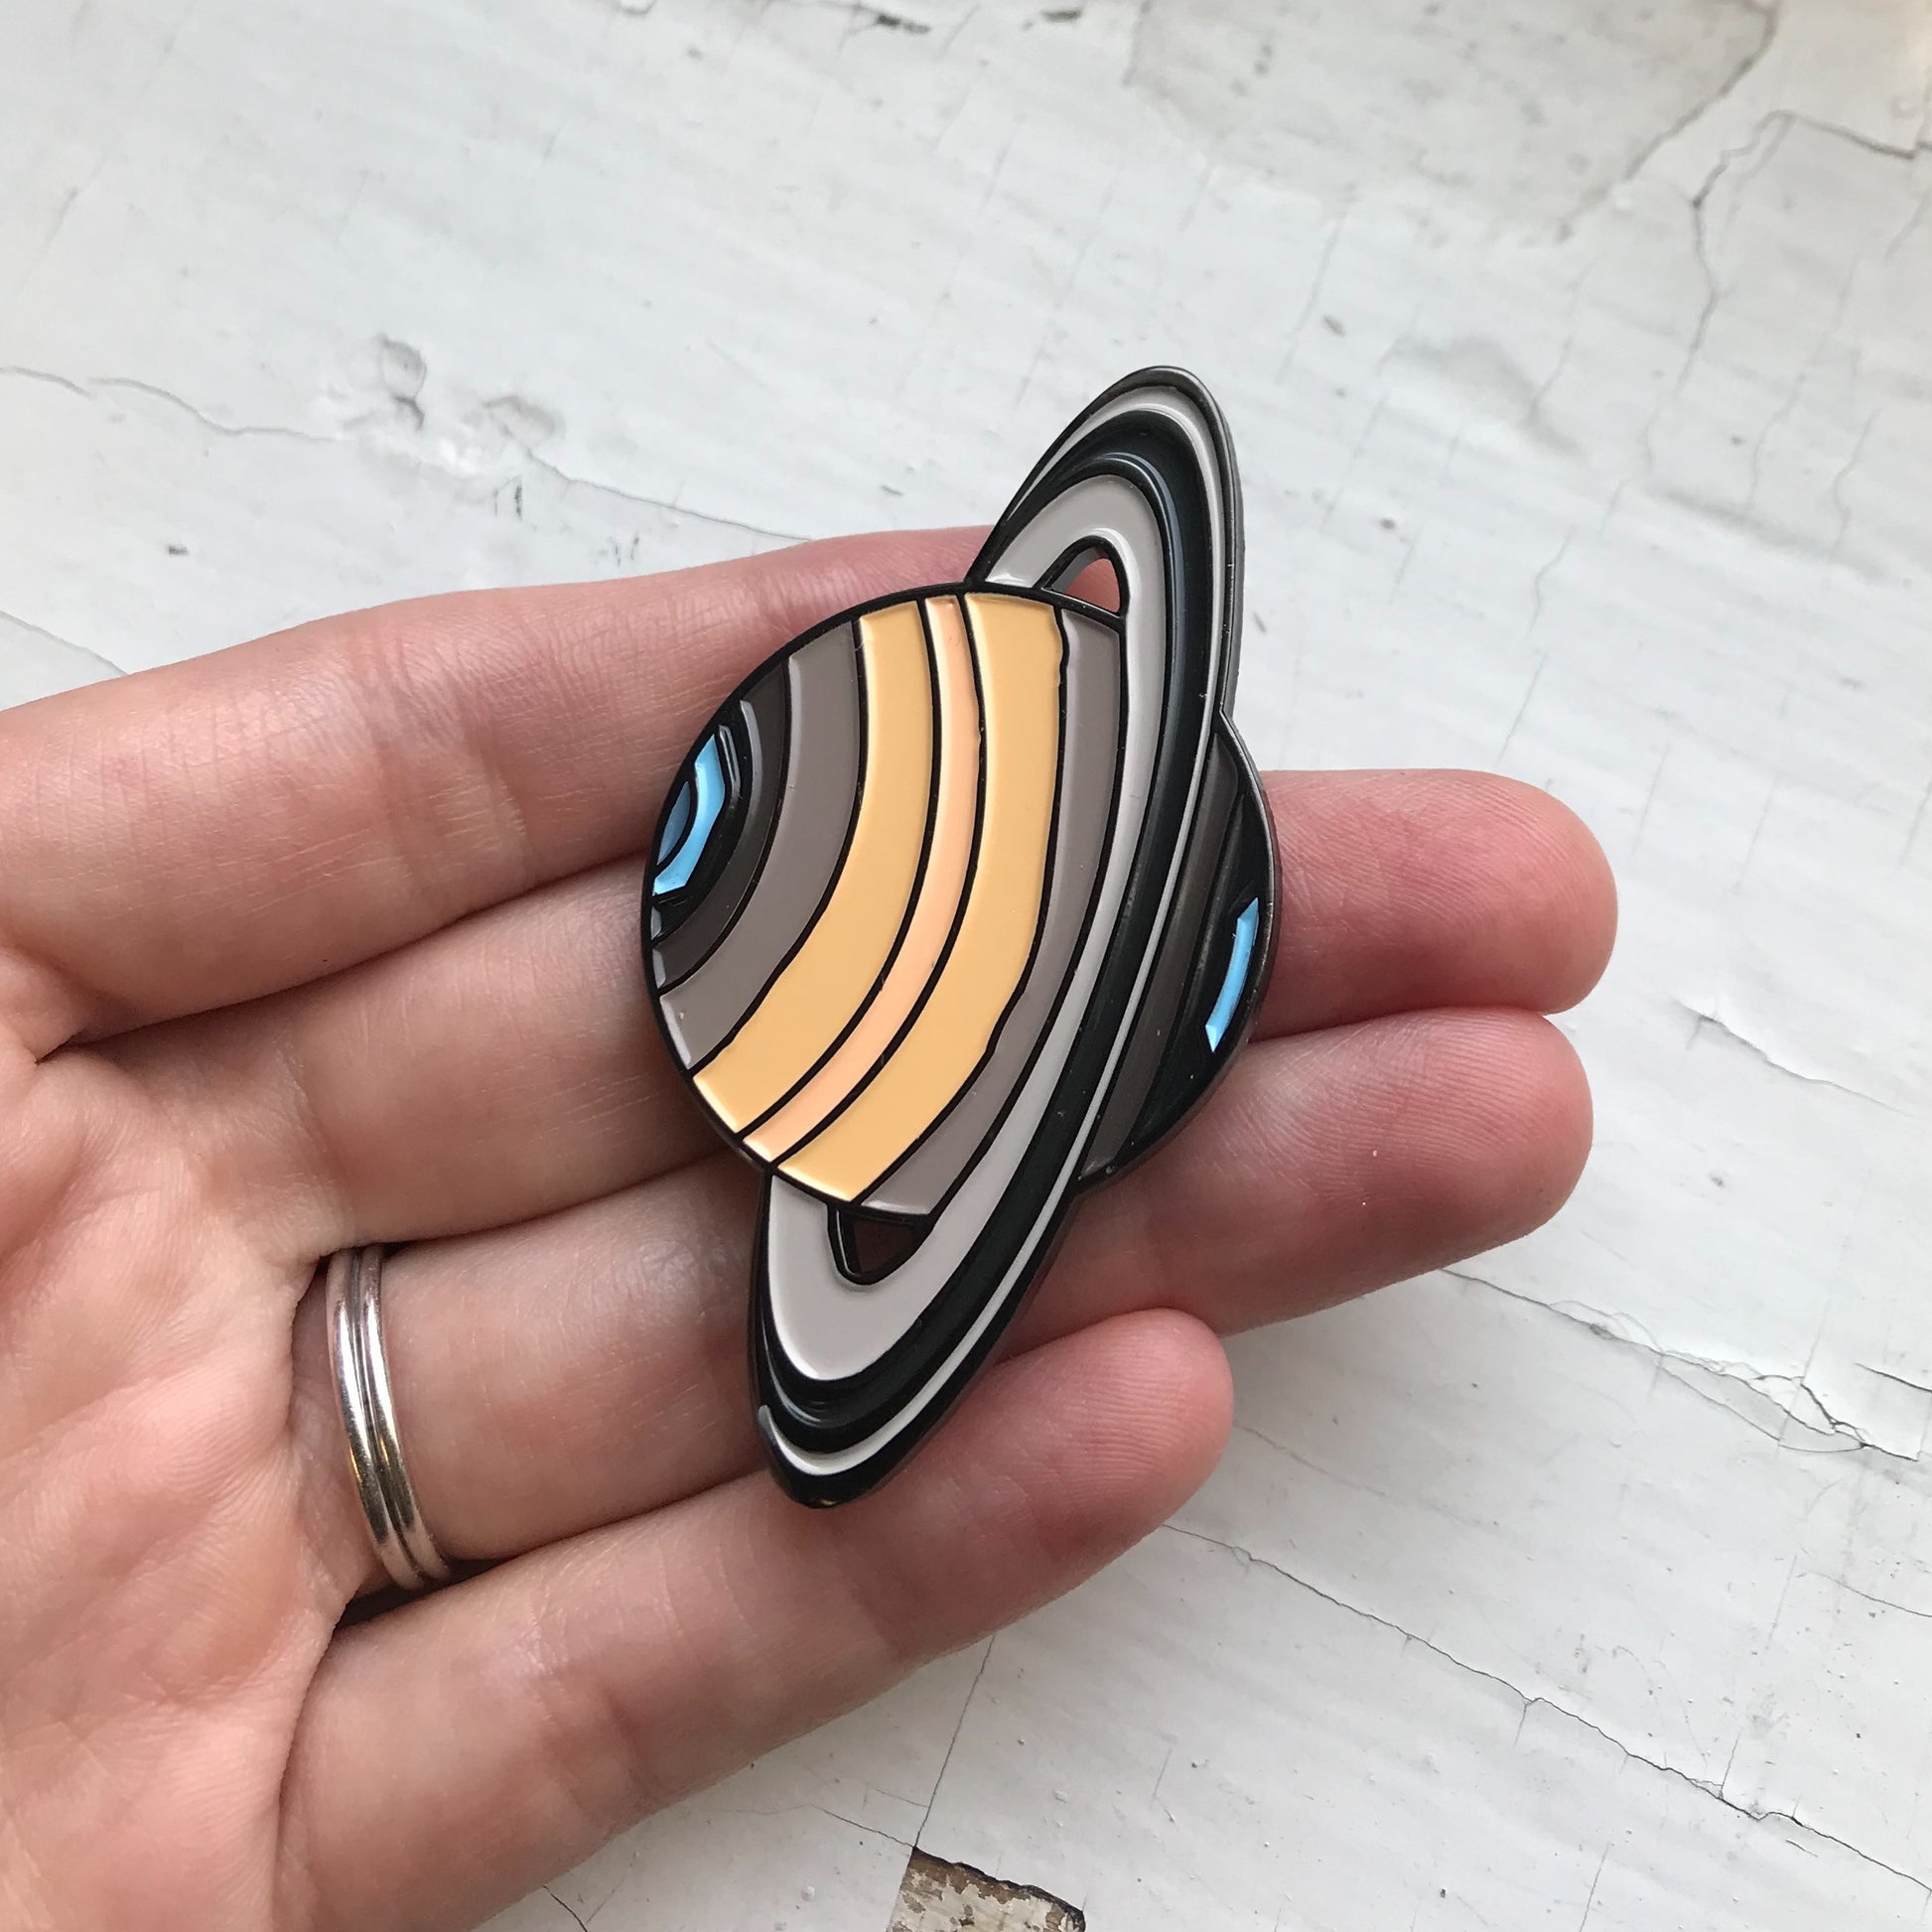 Saturn Enamel Pin Enamel Pin Yugen Handmade   